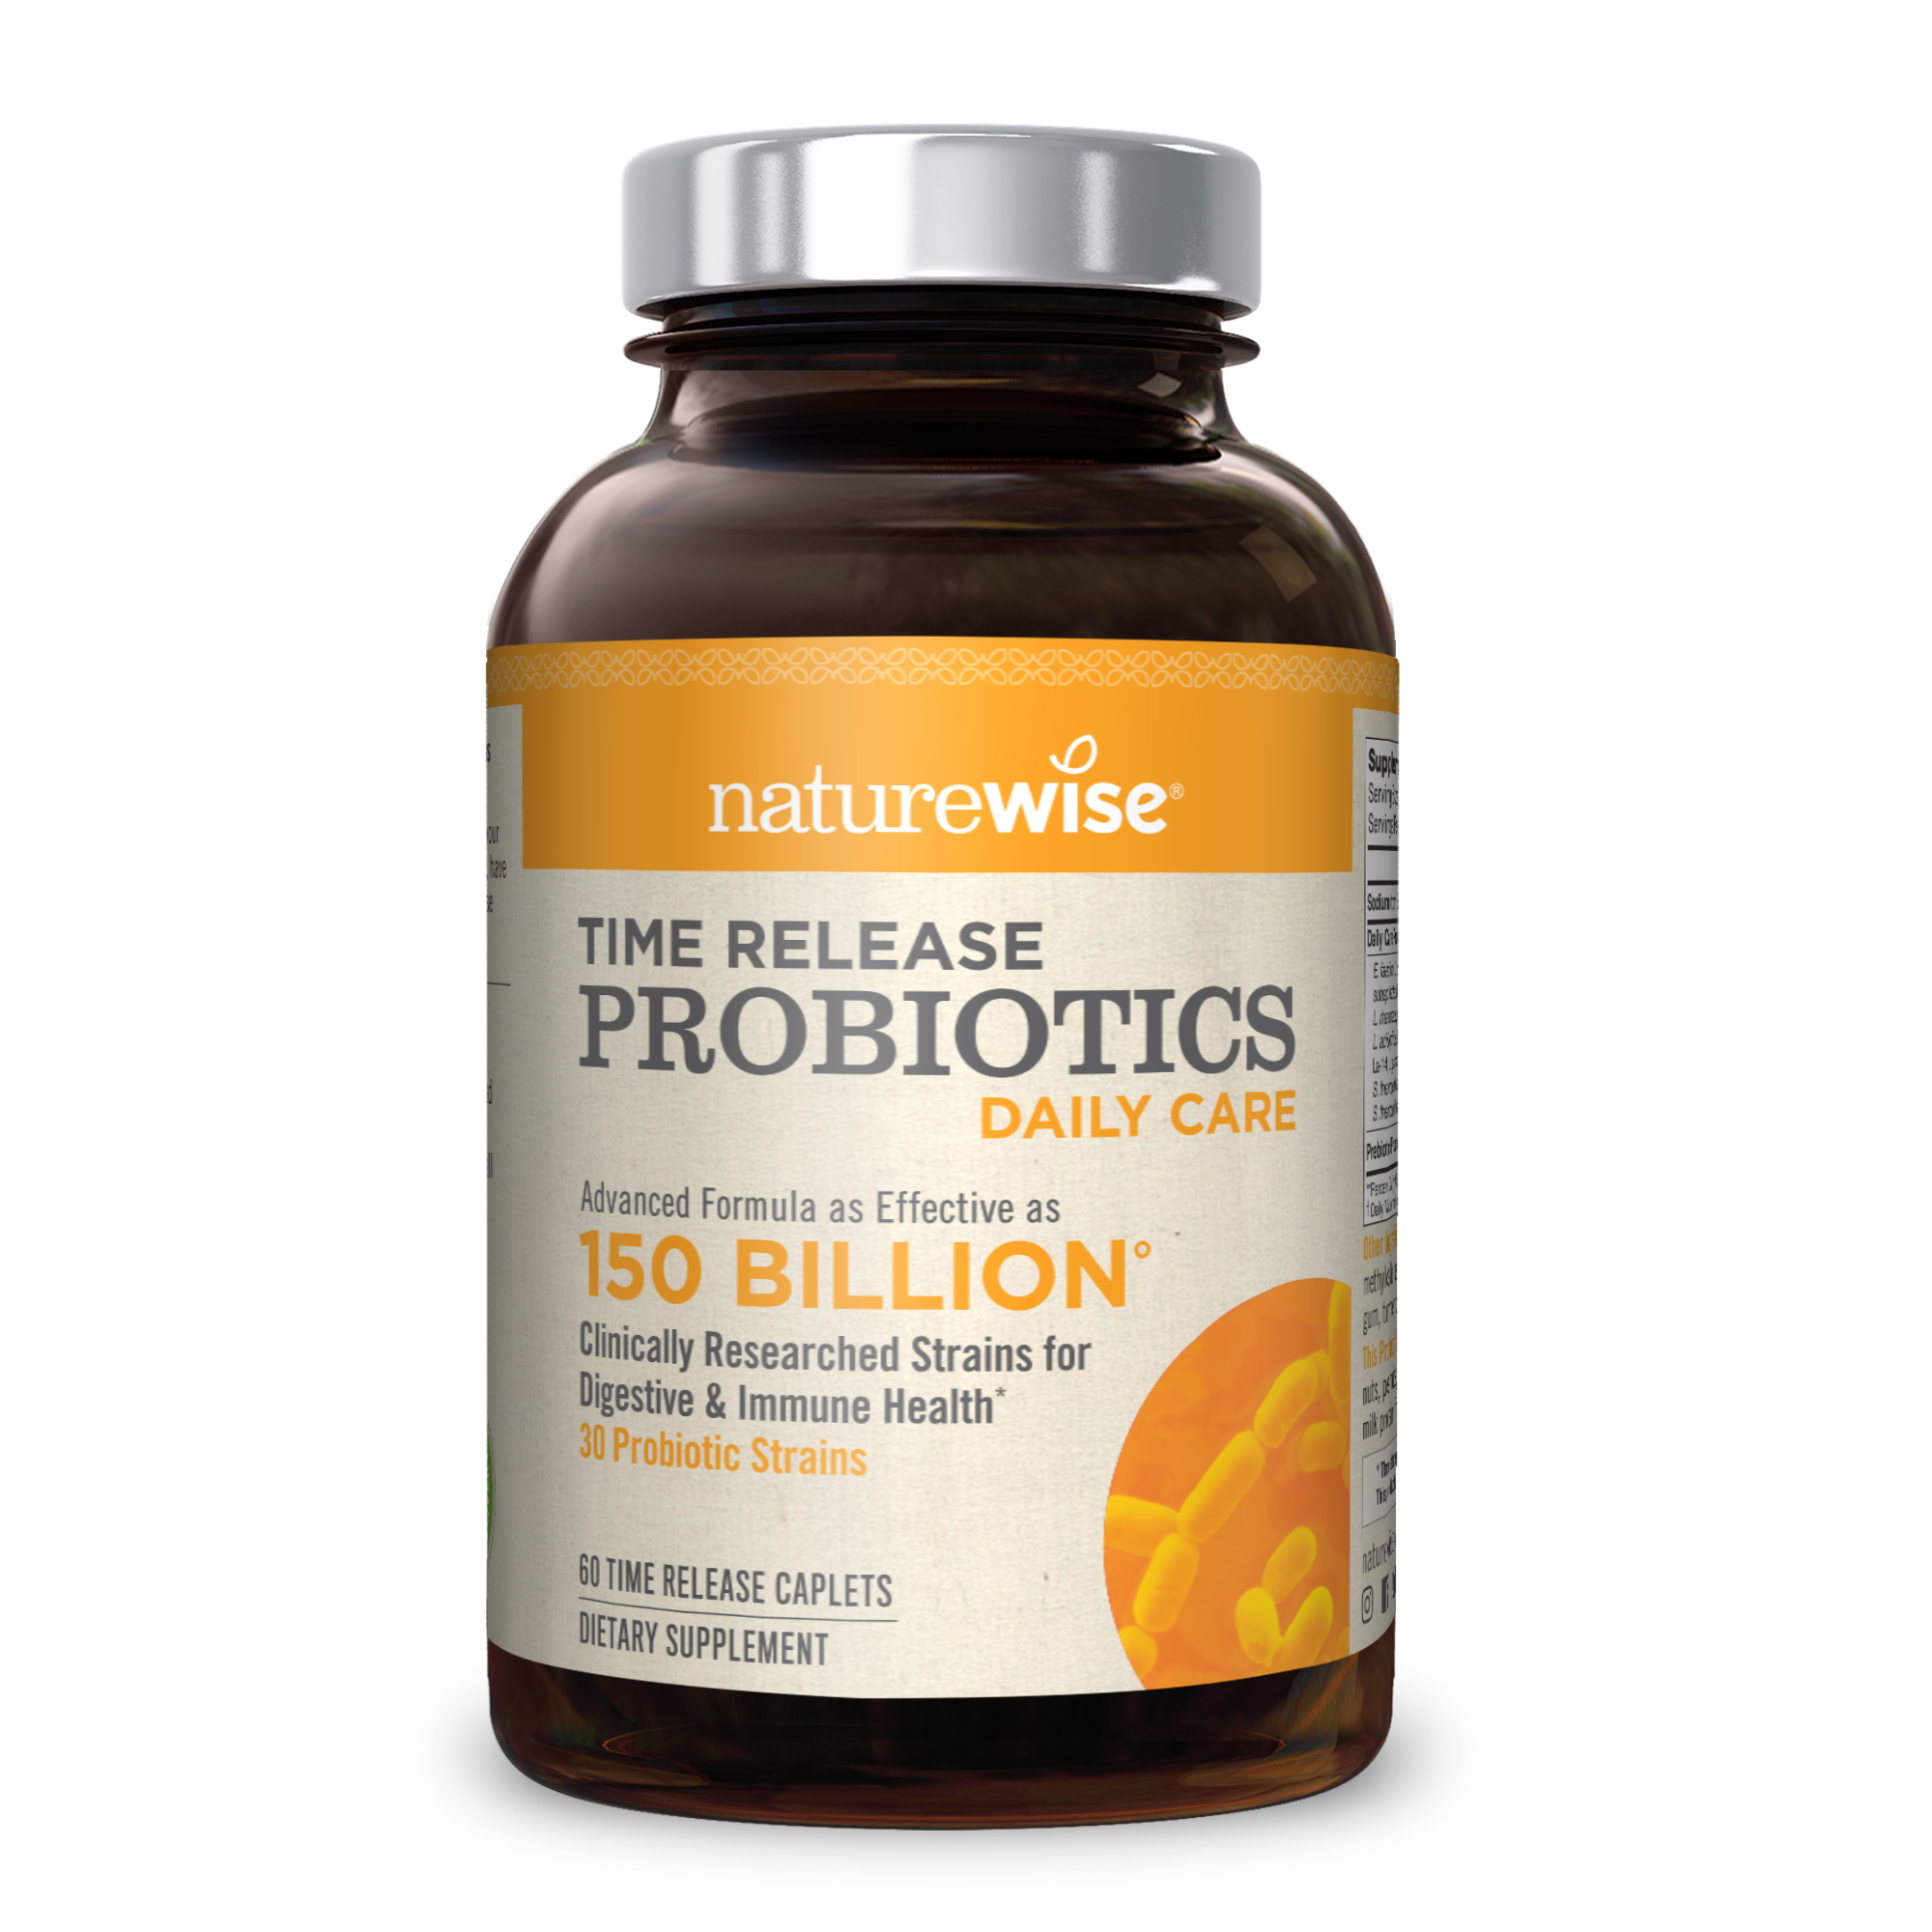 Daily Care Probiotics